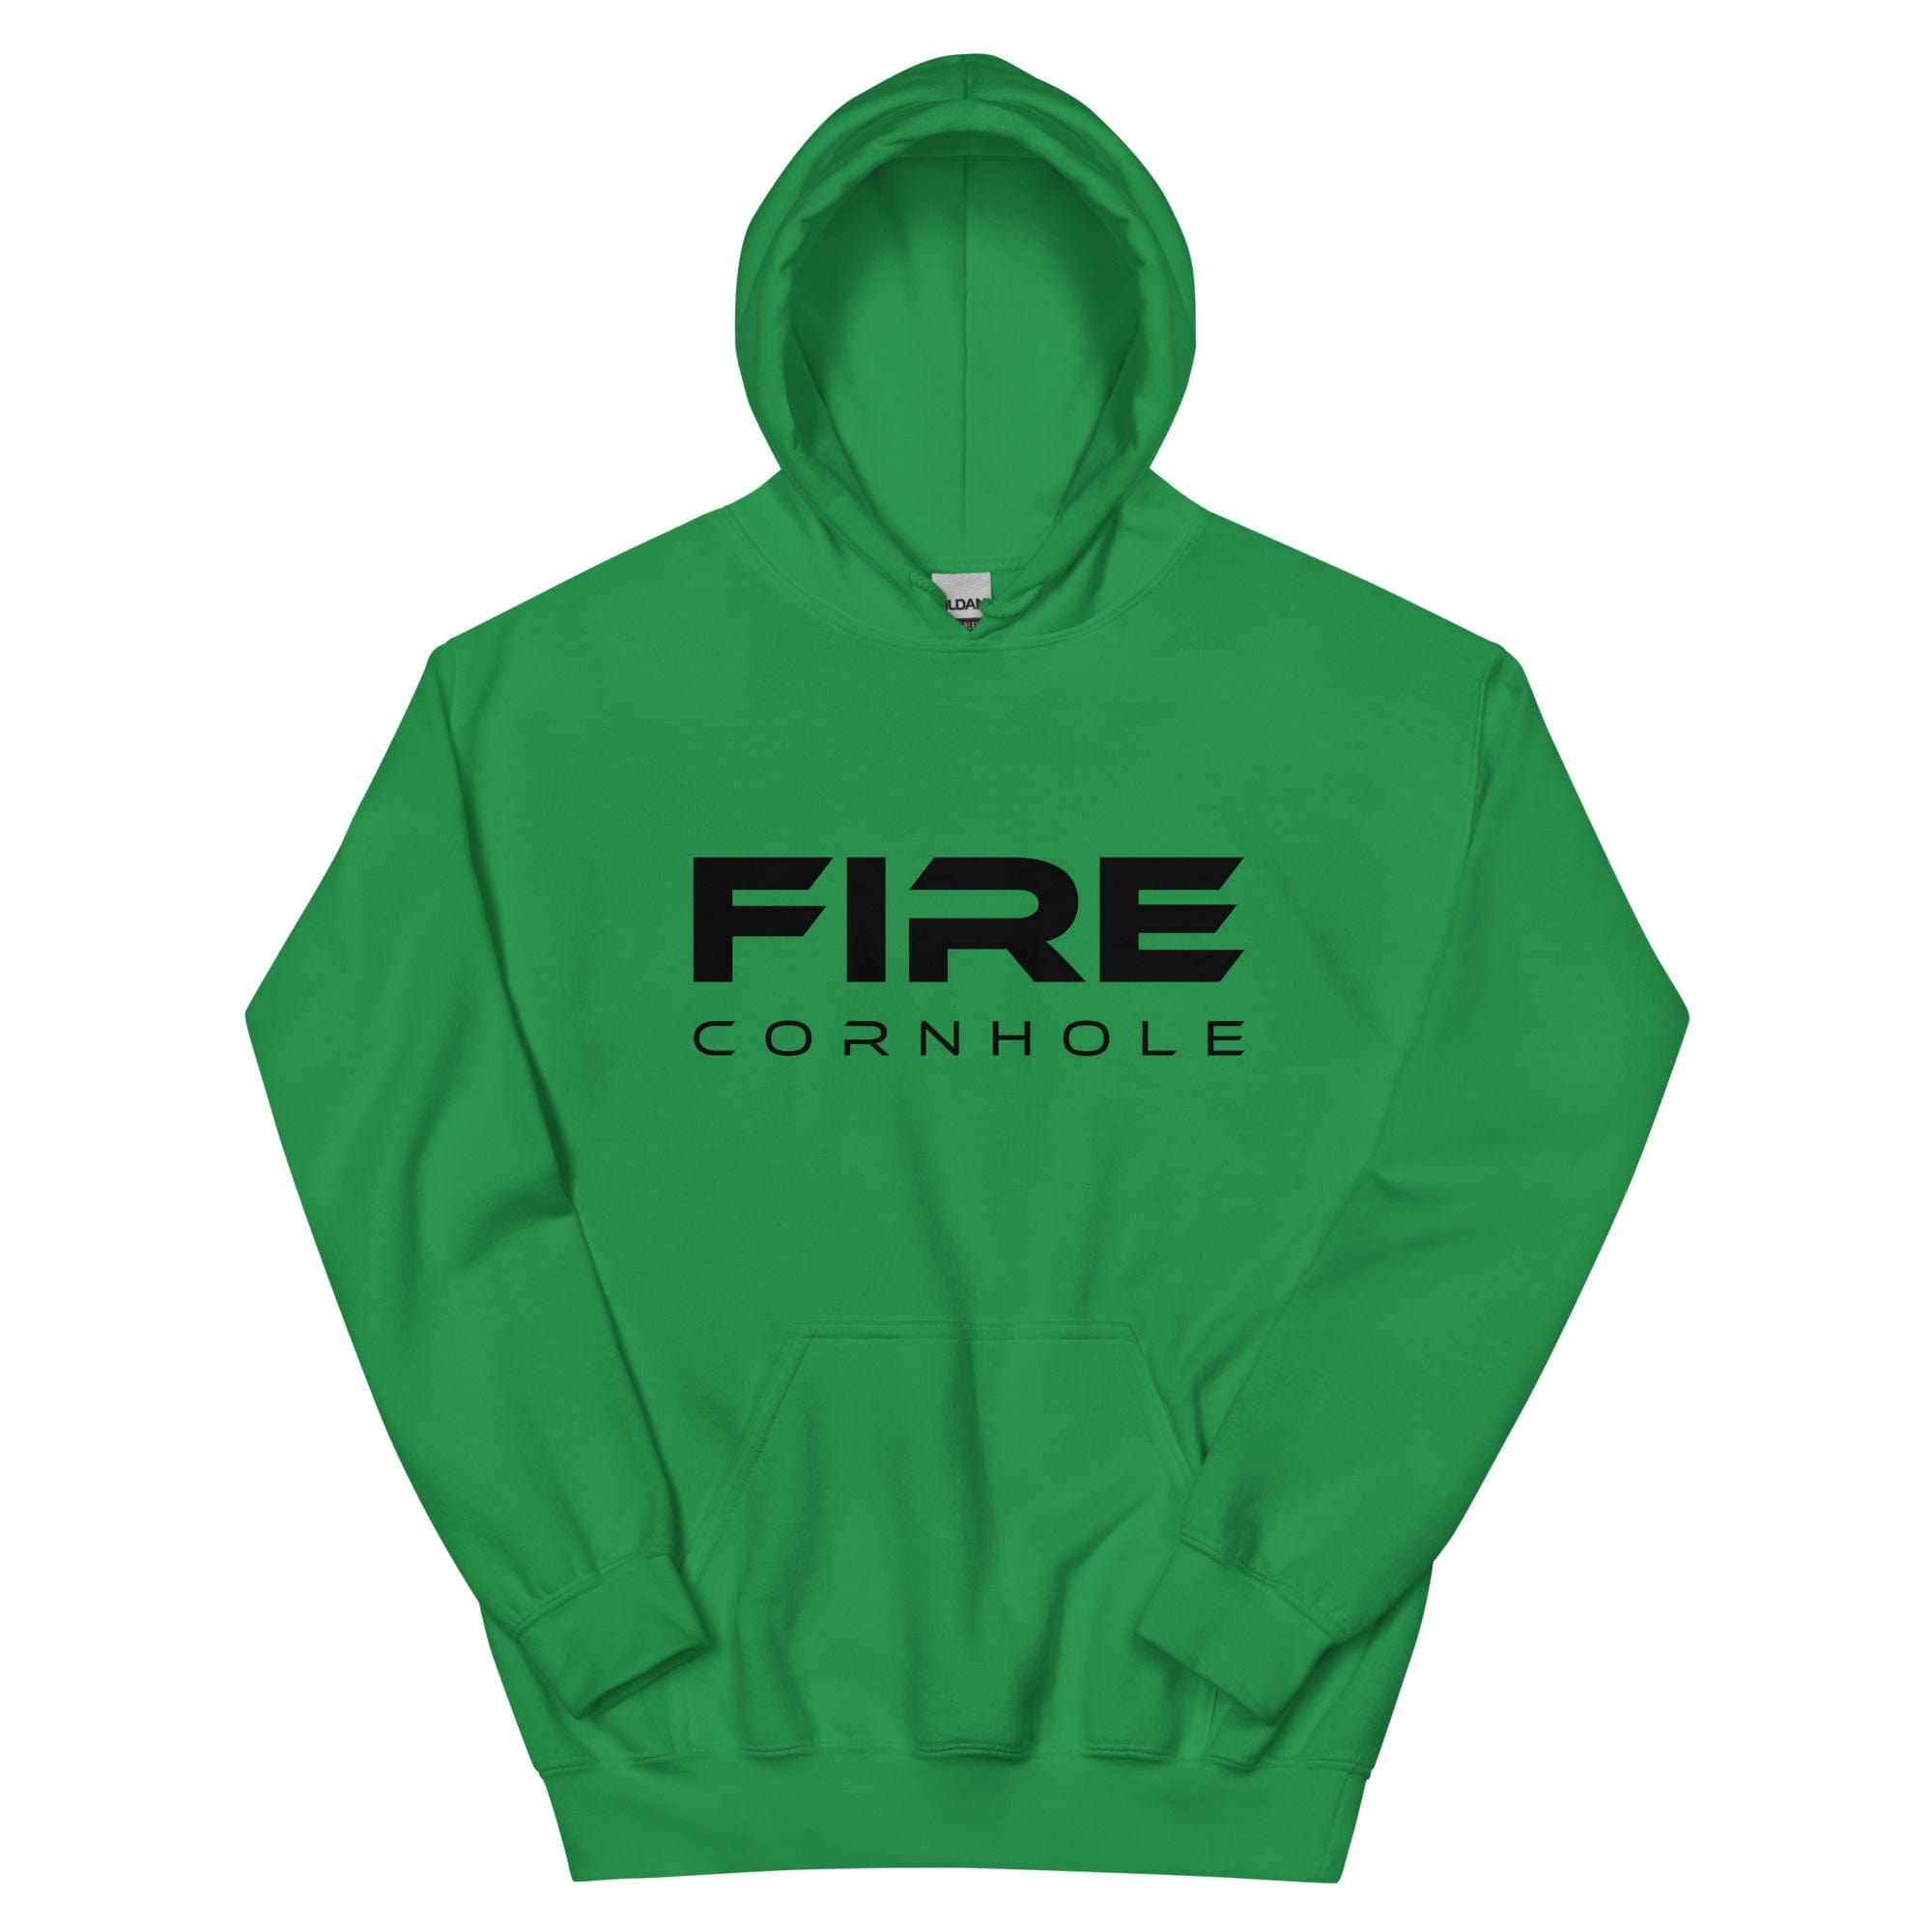 Green unisex cotton hoodie with Fire Cornhole logo in black